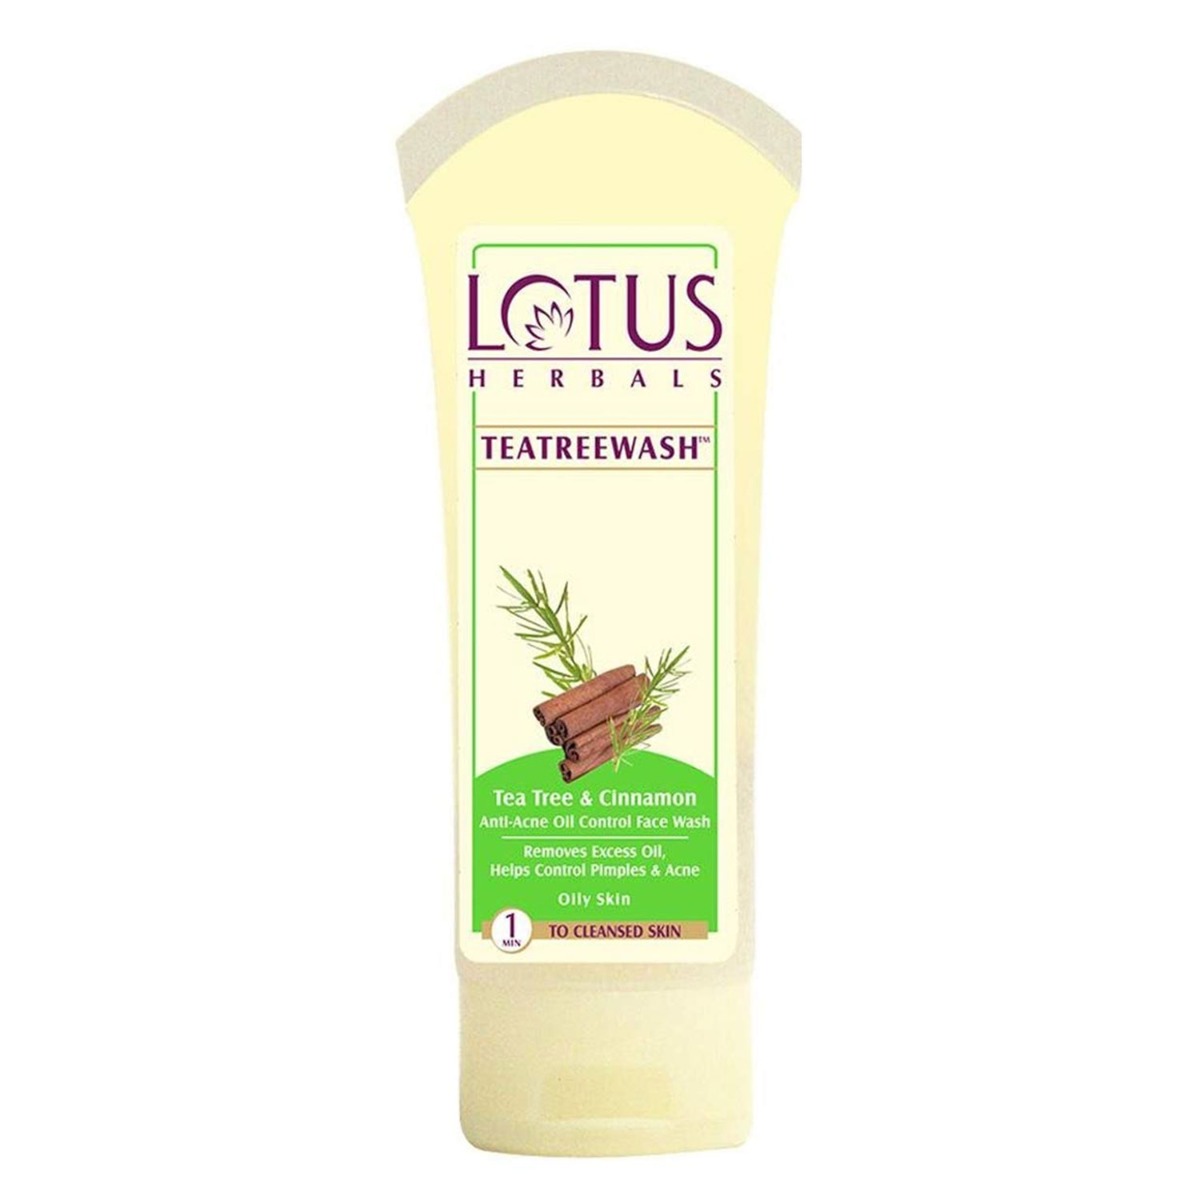 Lotus Herbals Tea Tree & Cinnamon Anti-acne Oil Control Face Wash, 80gm